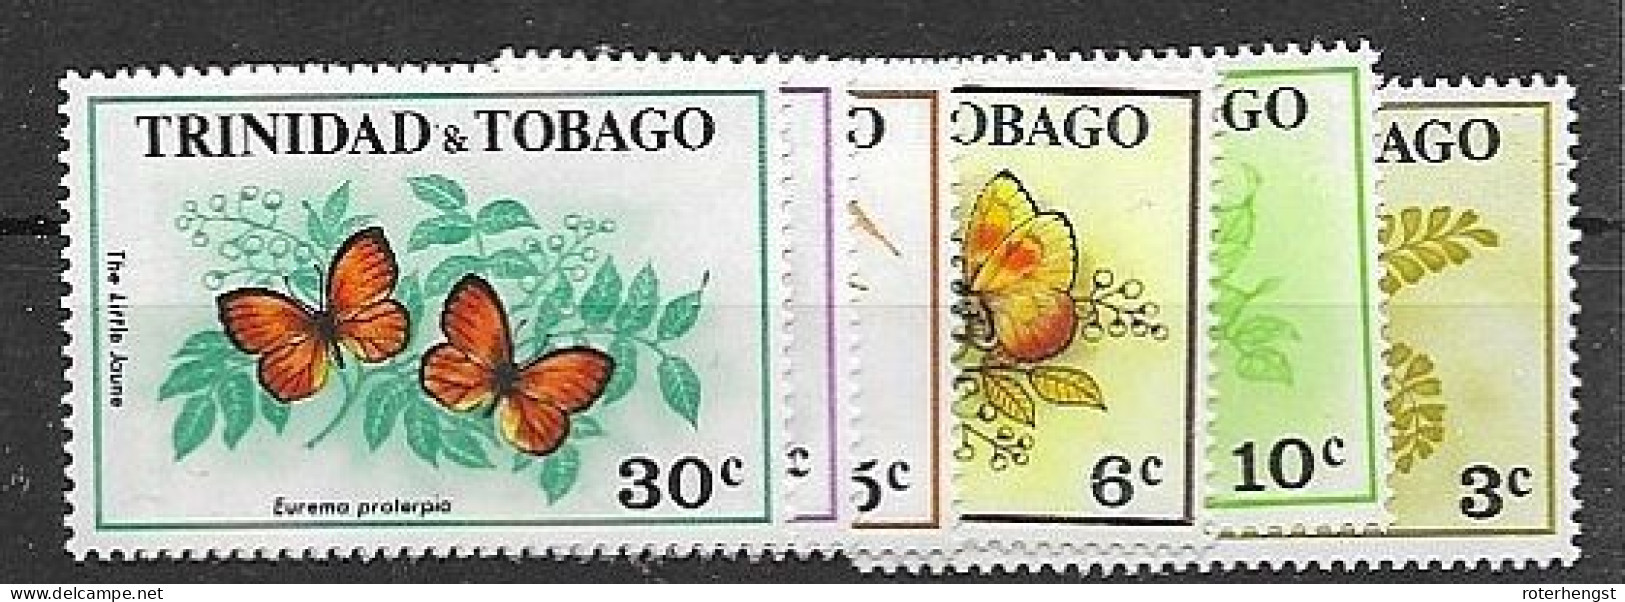 Trinidad & Tobago Mint Very Low Hinge Trace * 1972 (12 Euros) Butterfly Set - Trinité & Tobago (1962-...)